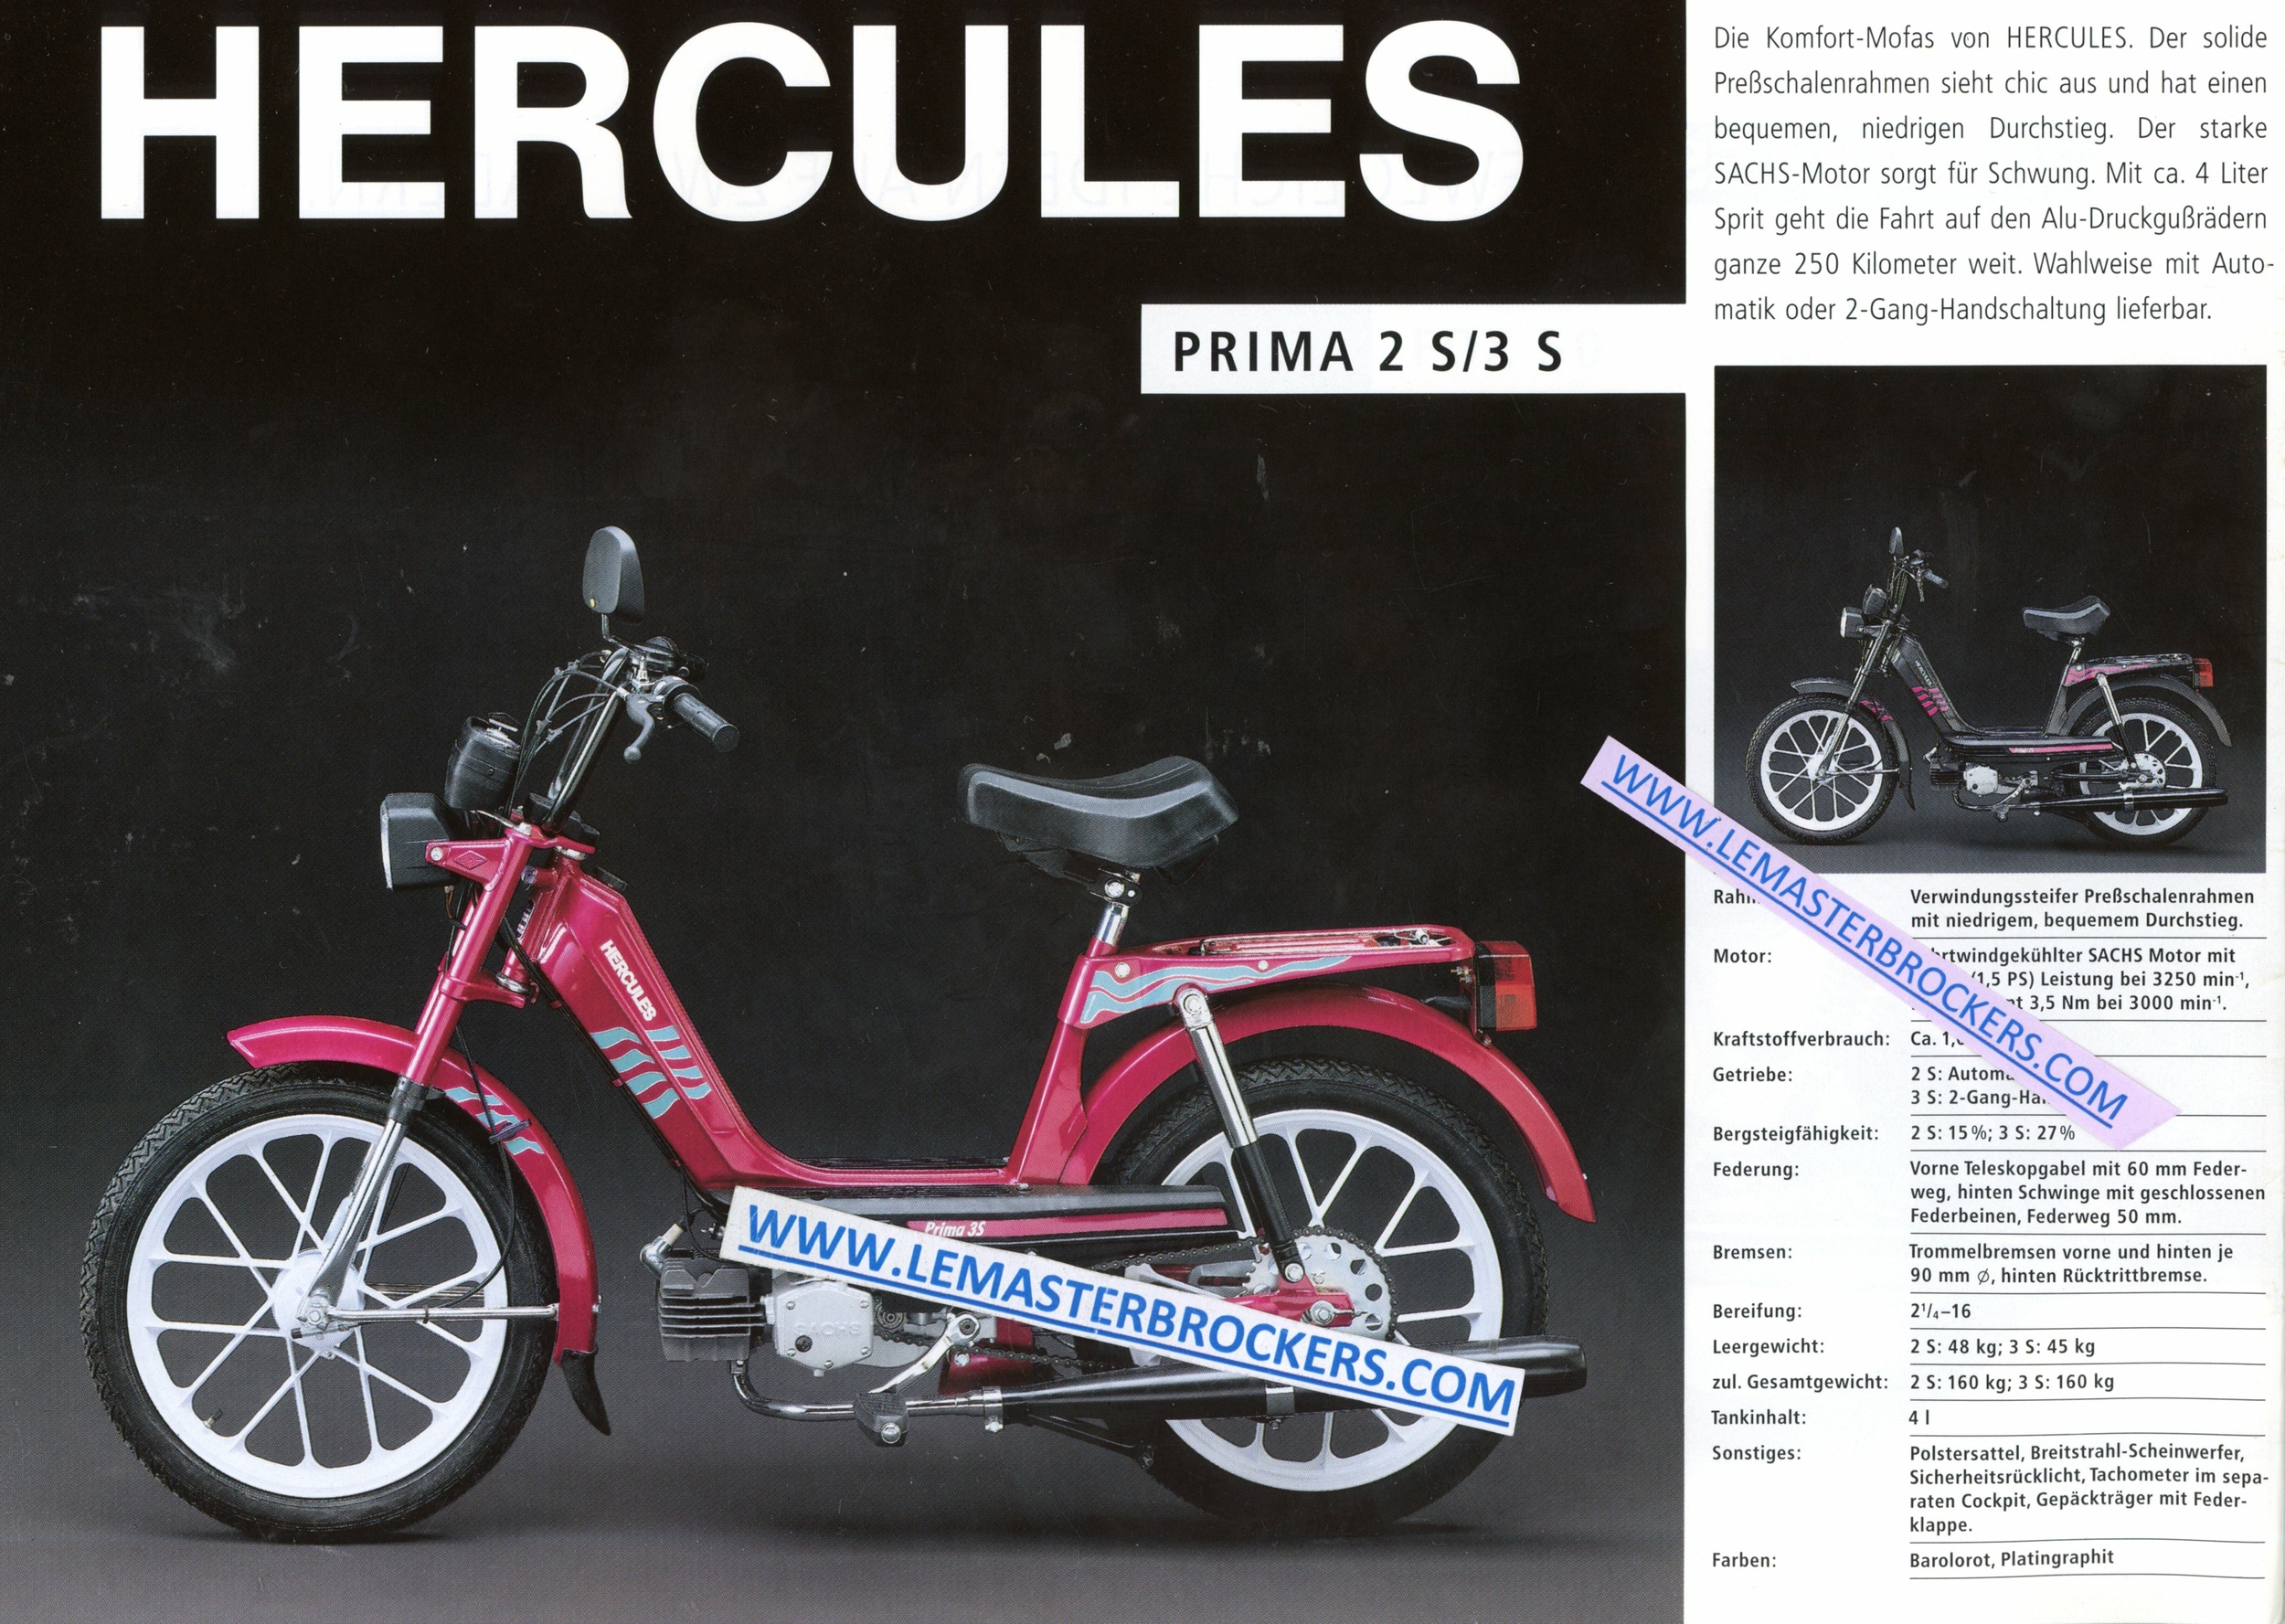 HERCULES PRIMA 2S 3S